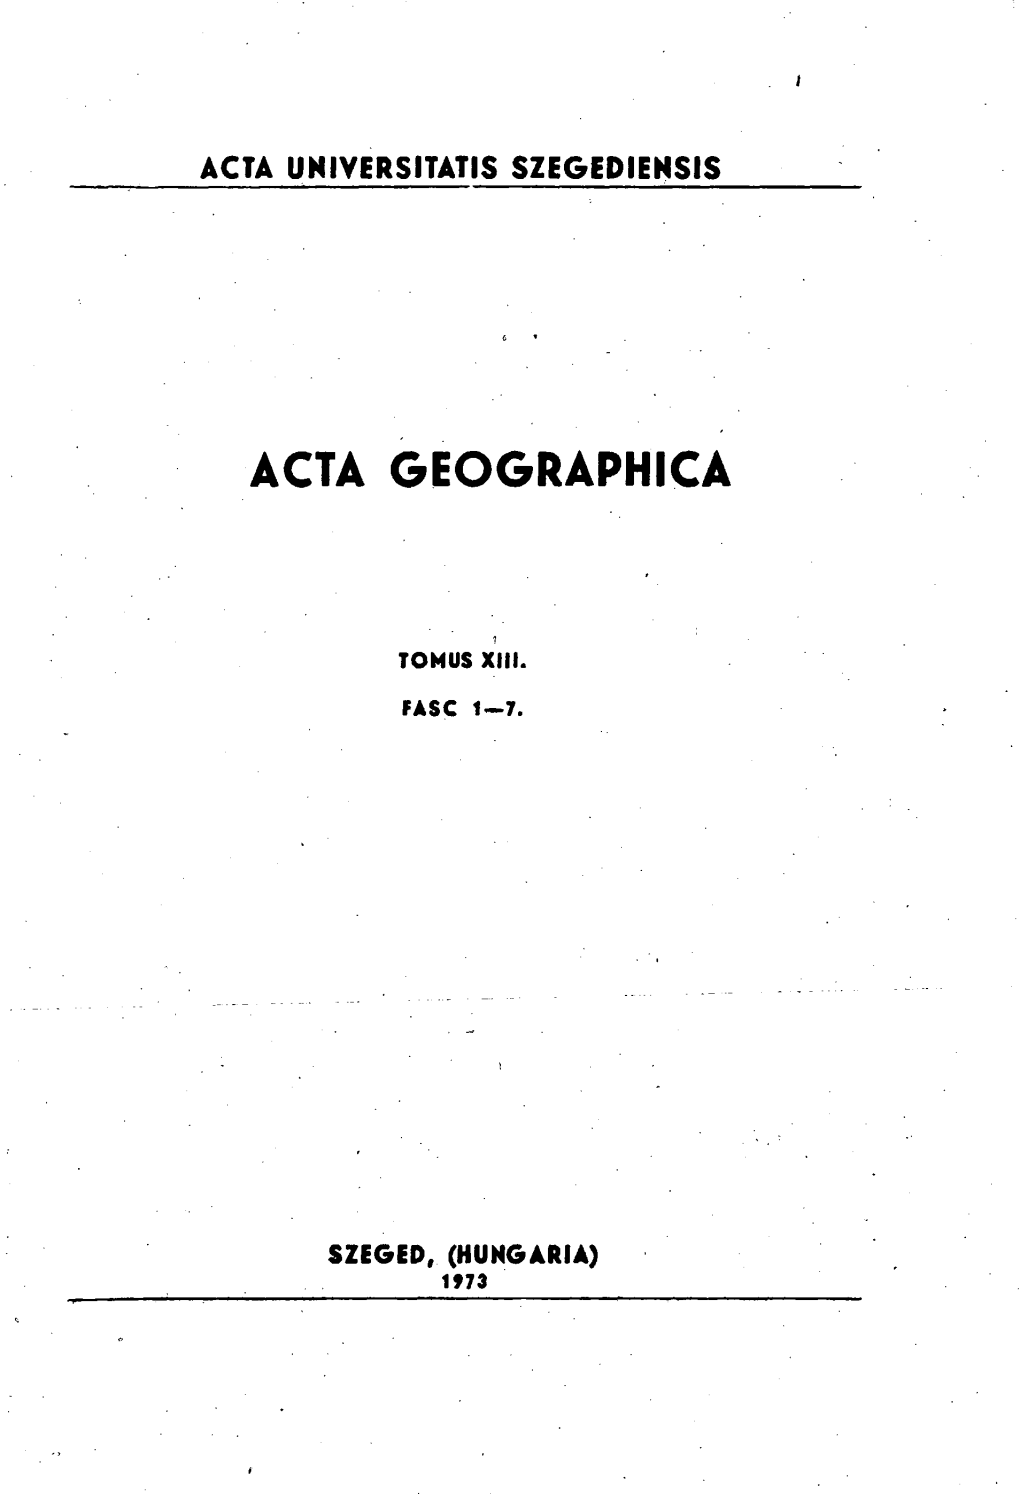 Acta Geographica